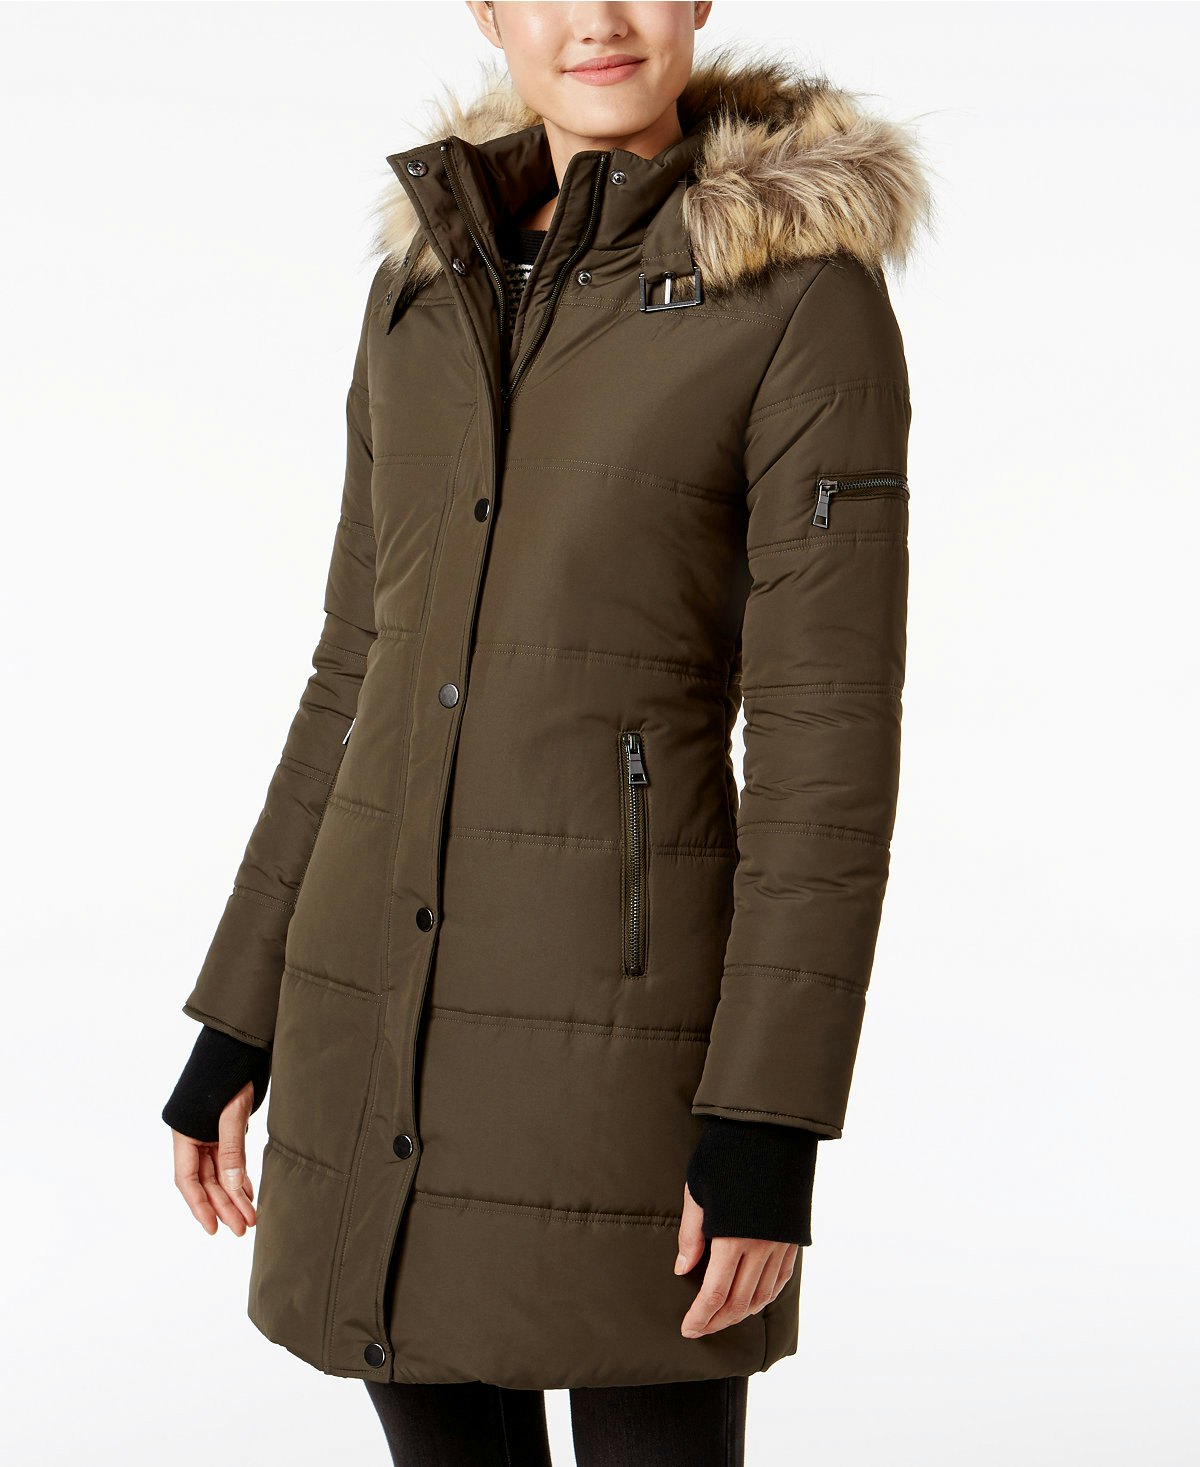 warm women's coats under $100